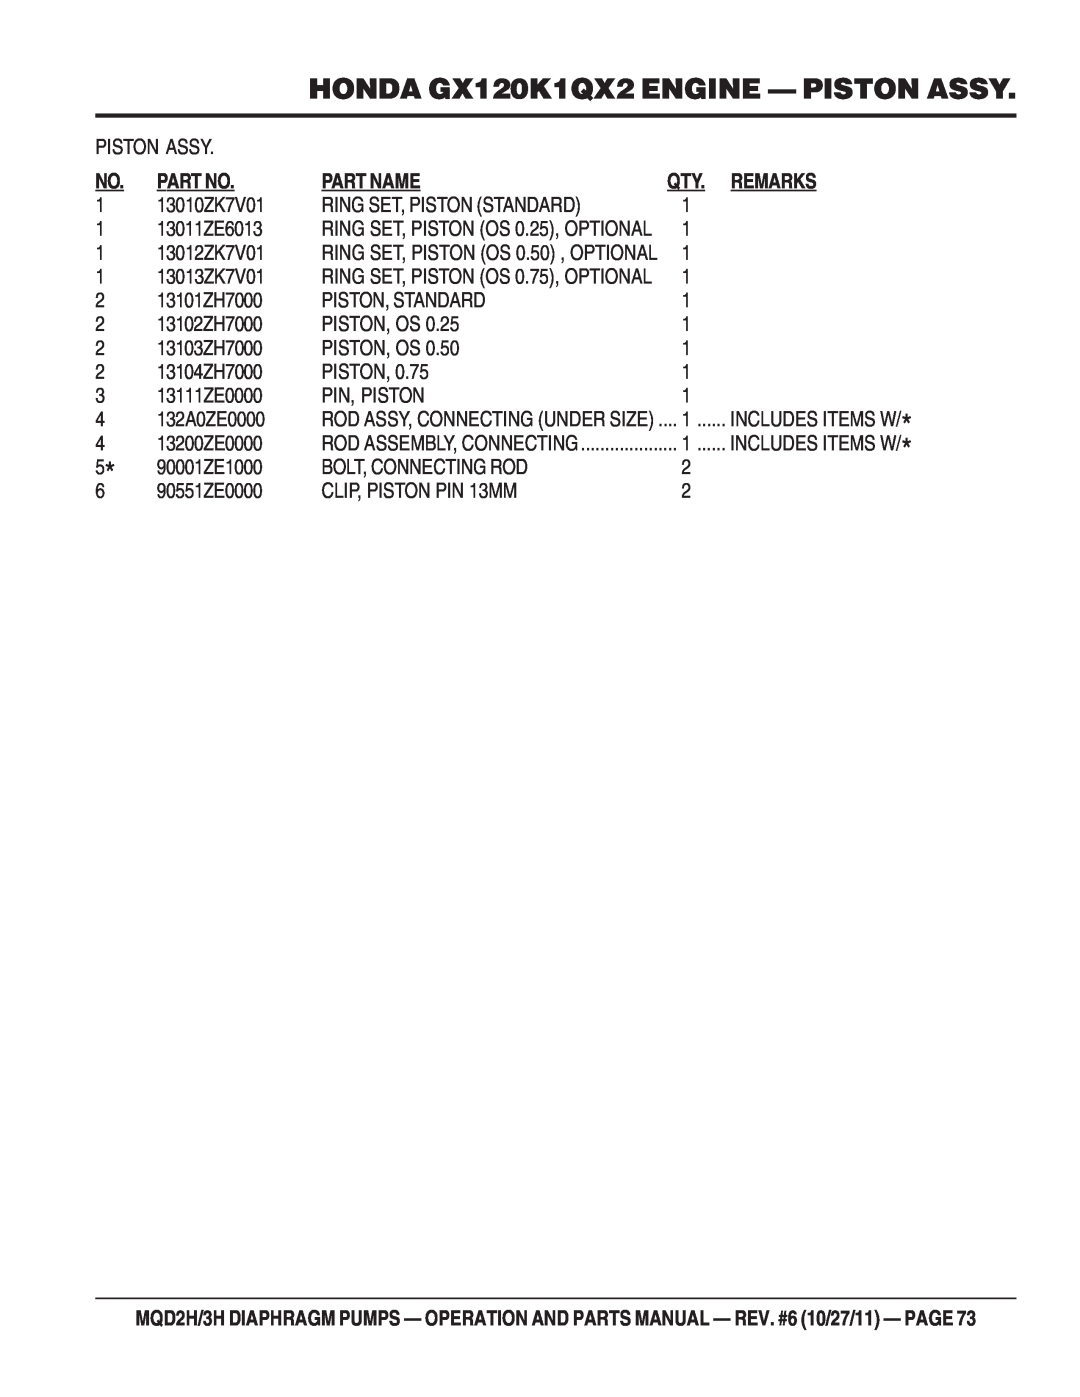 Multiquip MQD2H manual HONDA GX120K1QX2 ENGINE - PISTON ASSY, Piston Assy, Part Name 